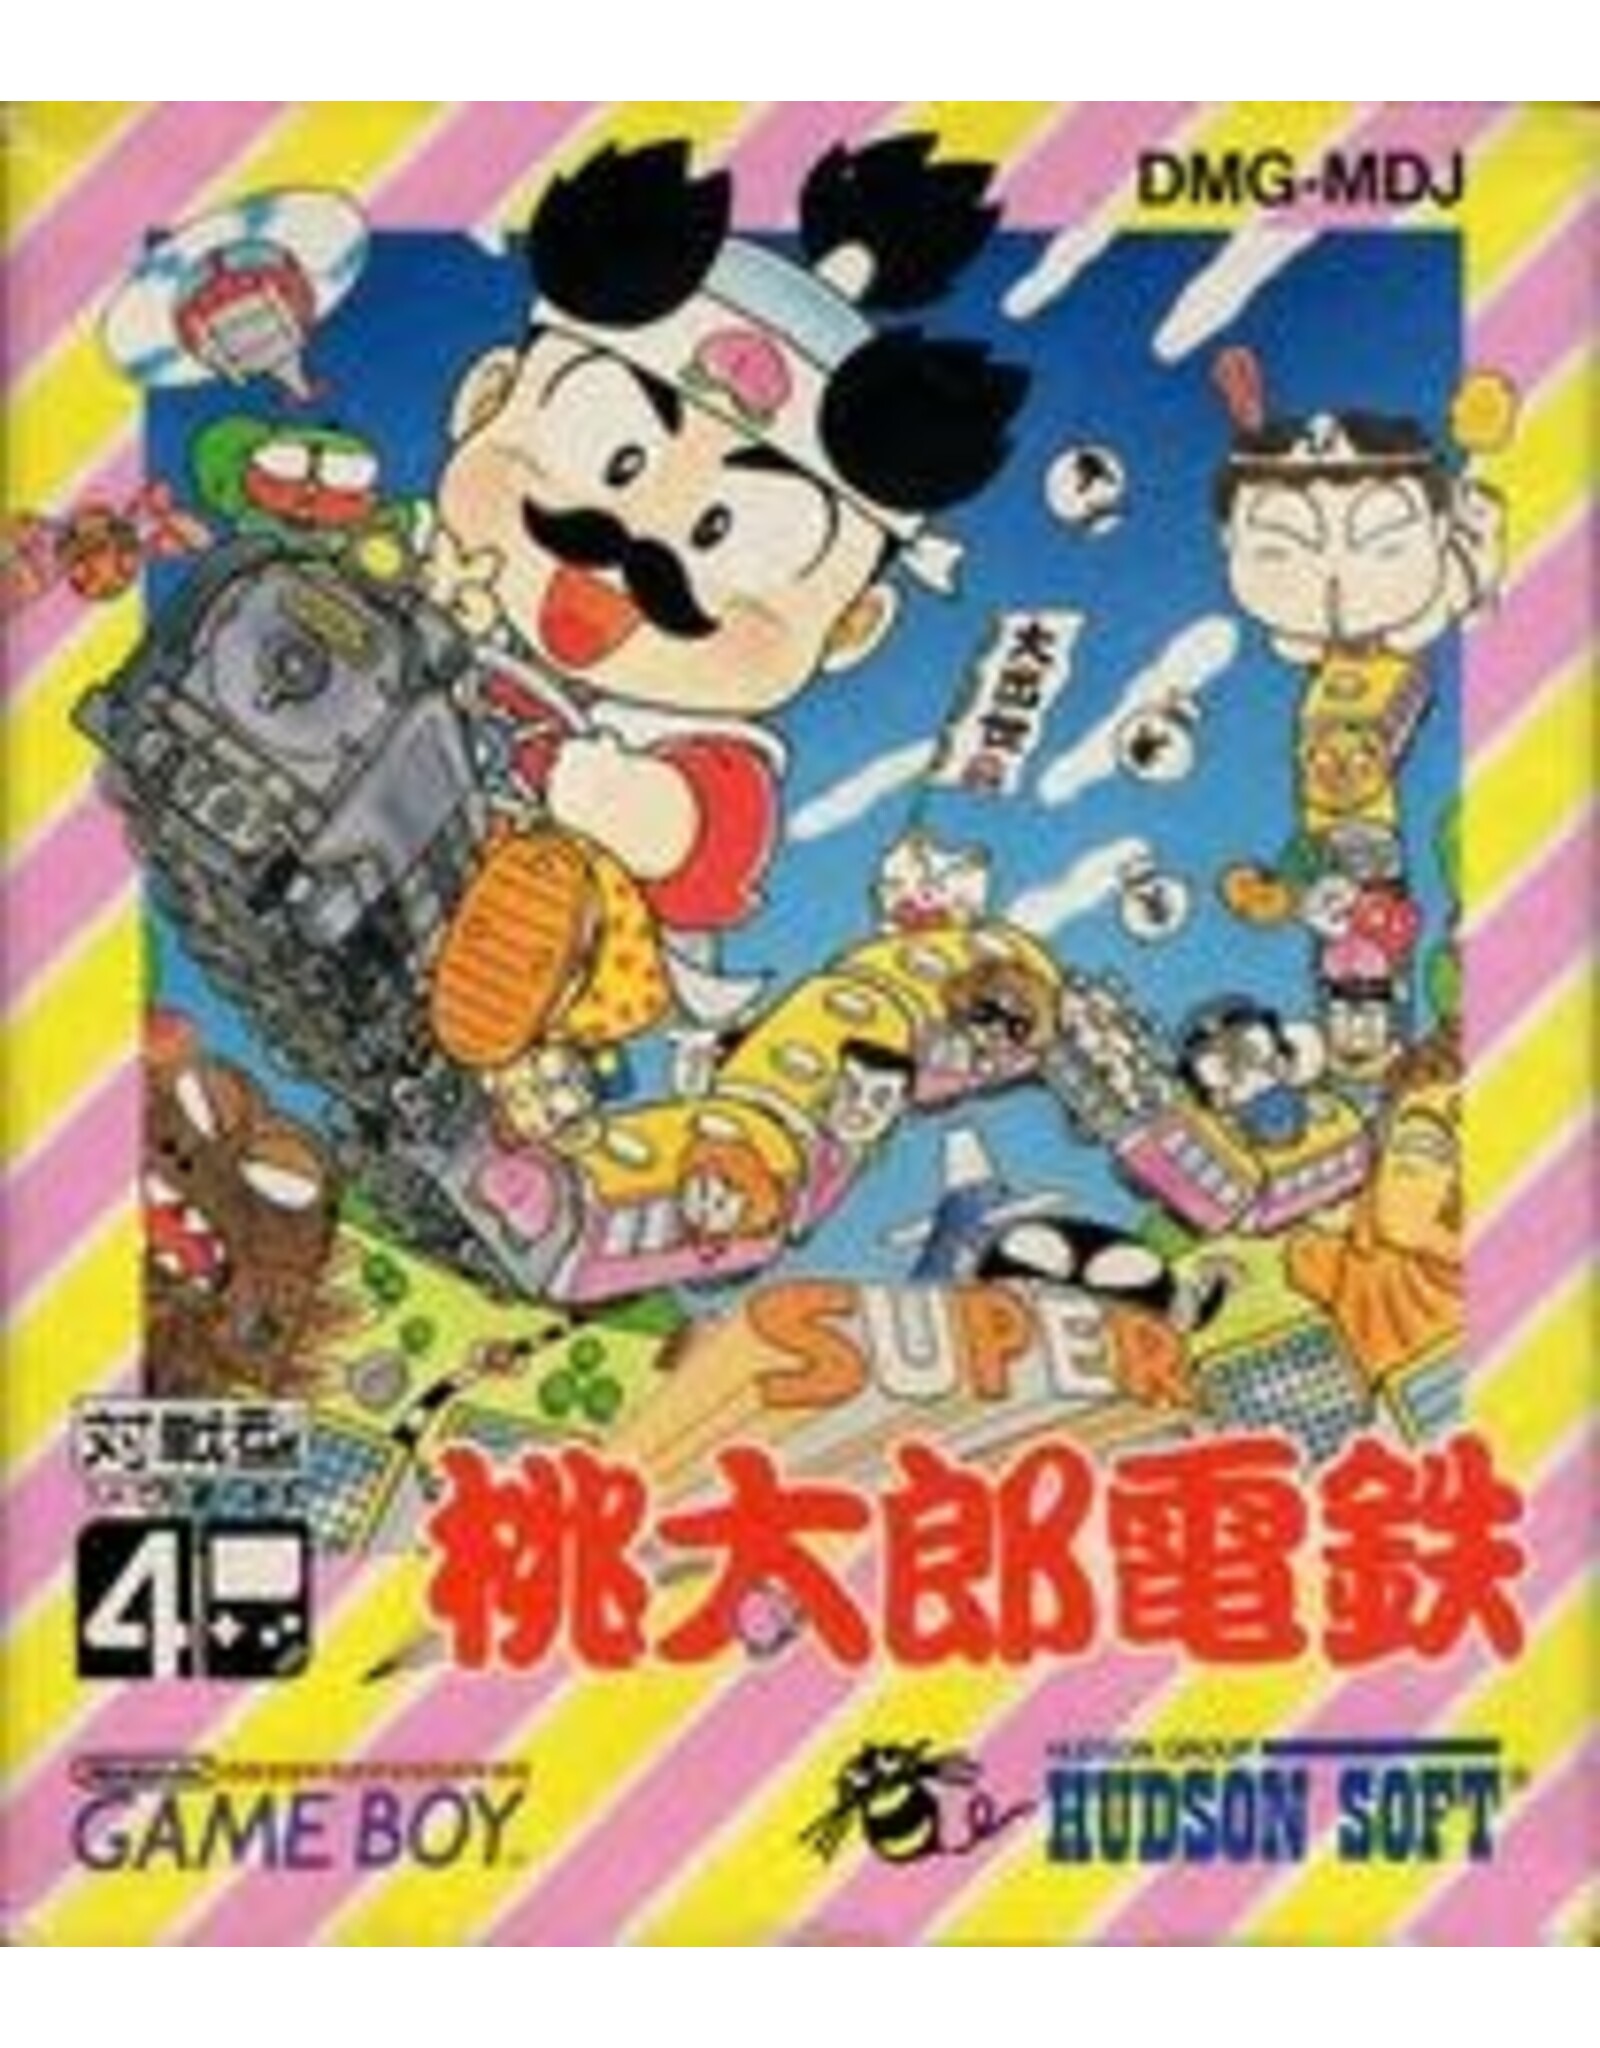 Game Boy Super Momotarou Dentetsu (Cart Only, Damaged Cart, JP Import)